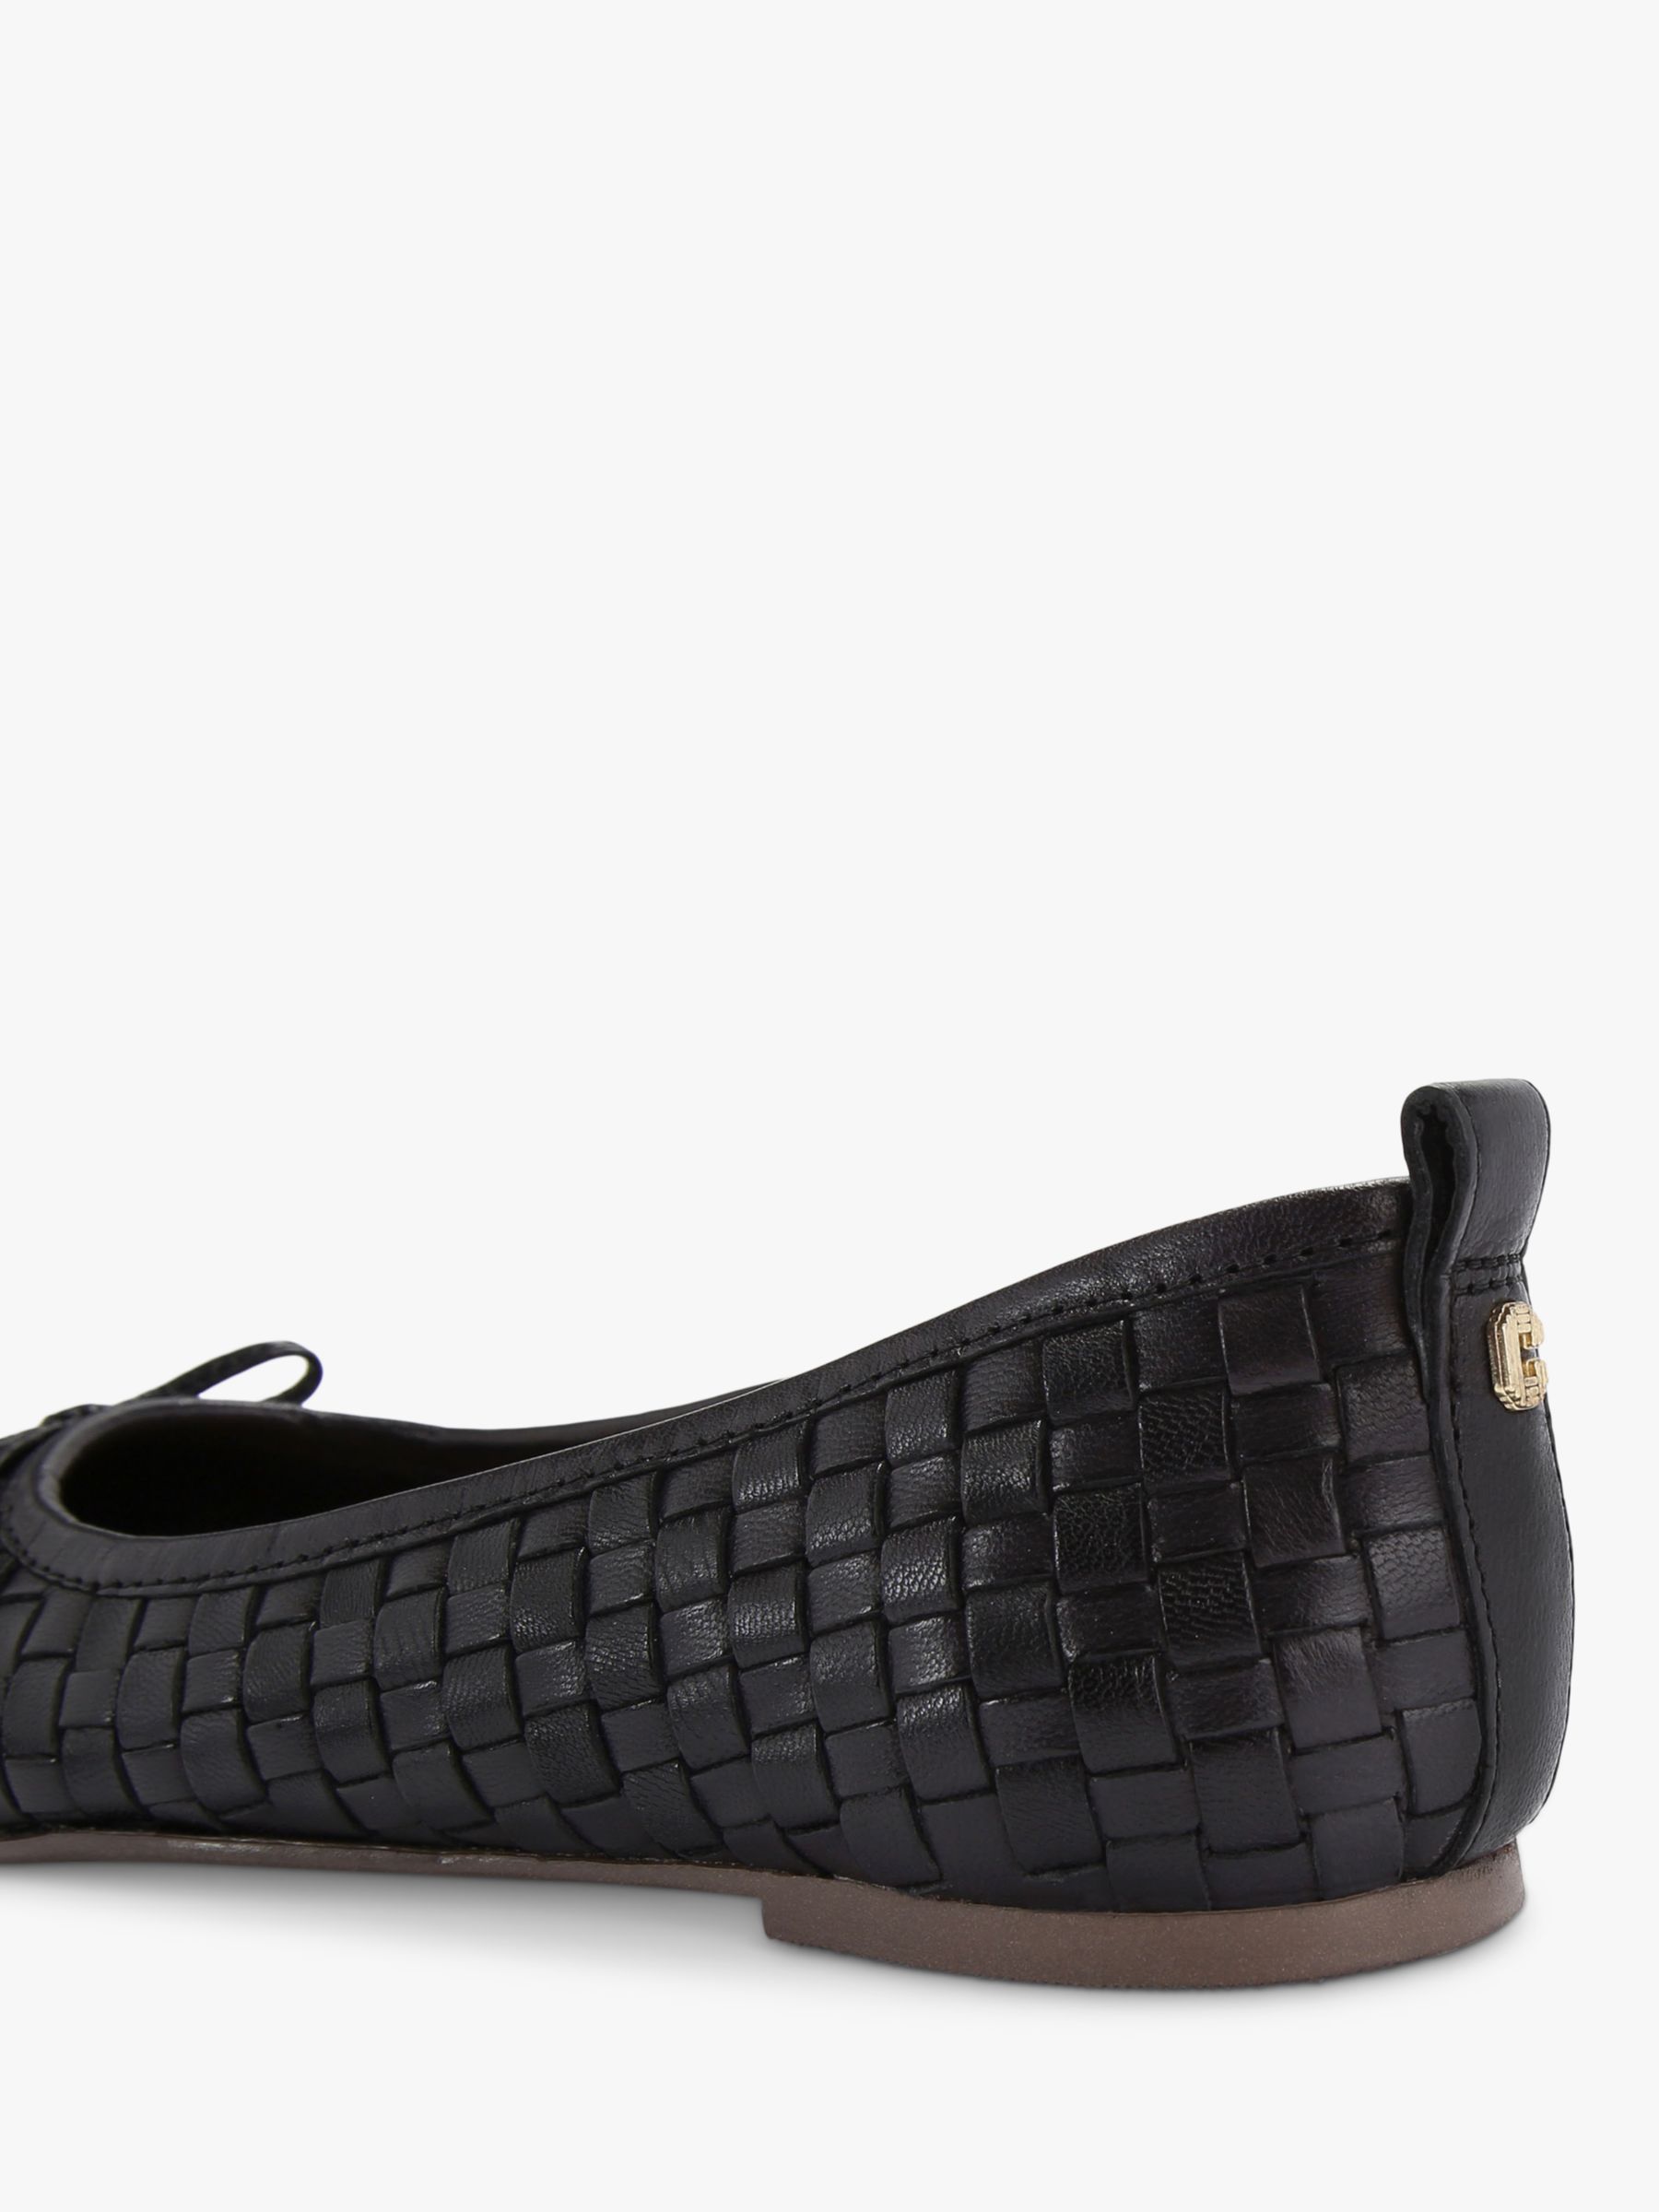 Carvela Evie Leather Ballet Shoes, Black, 3